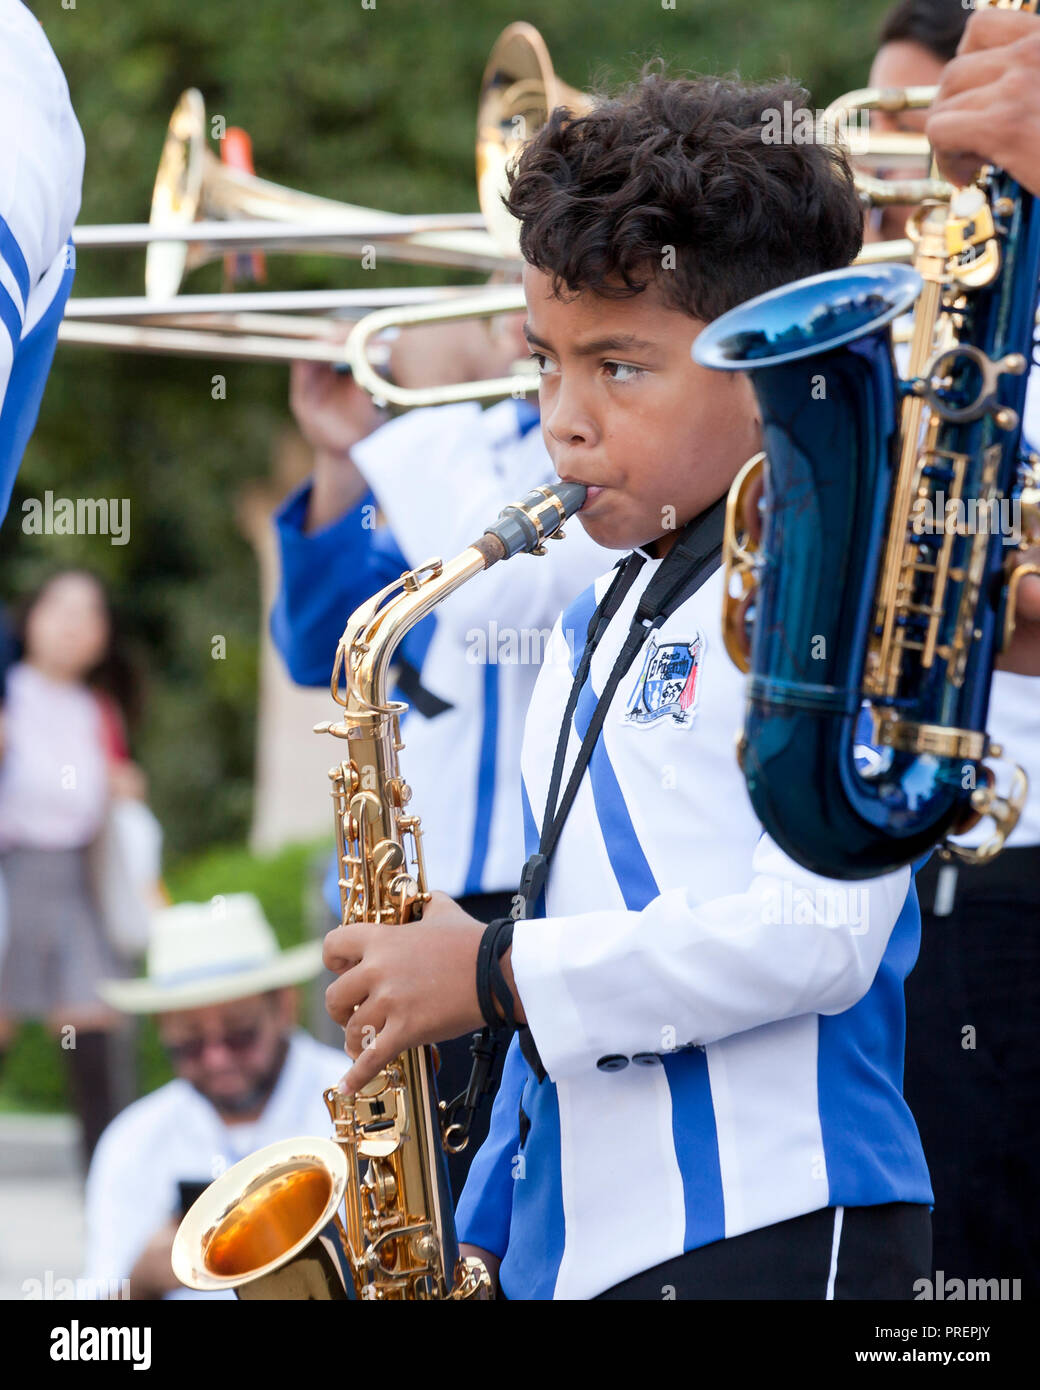 Preteen Hispanic boy playing saxophone in a marching band (sax player) - USA Stock Photo